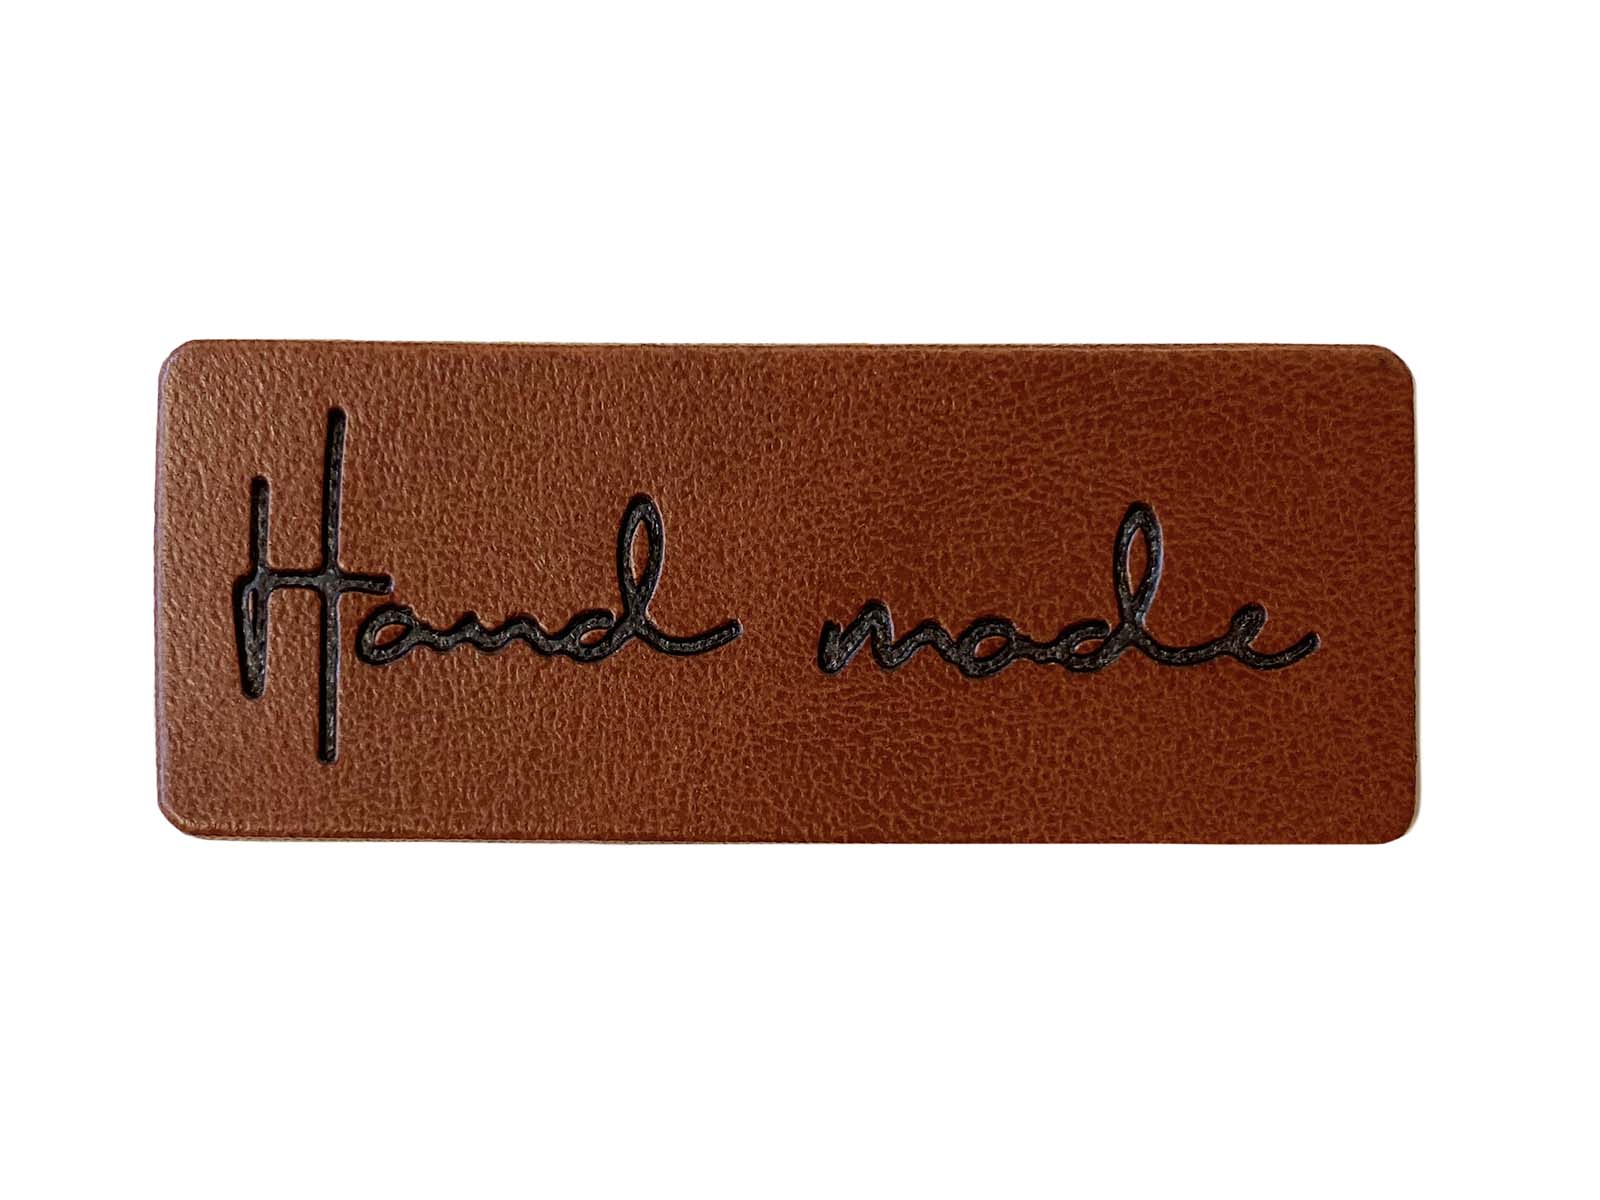 Label aus Kunstleder - "Hand made" in dunkelbraun